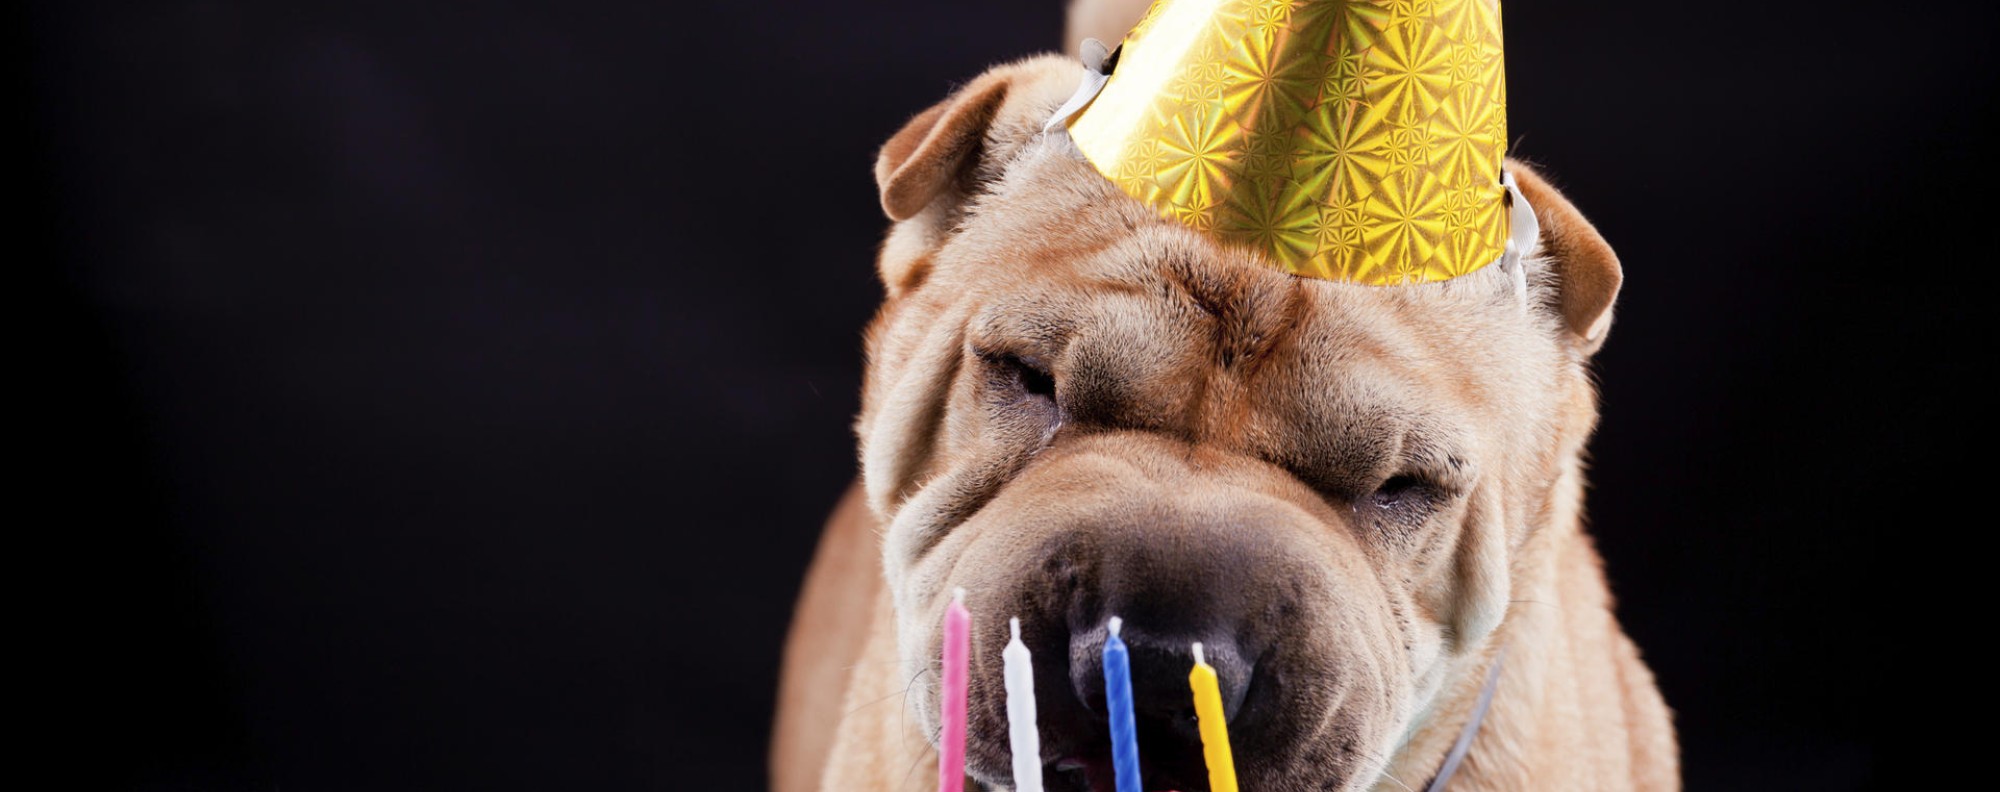 do dogs have birthdays